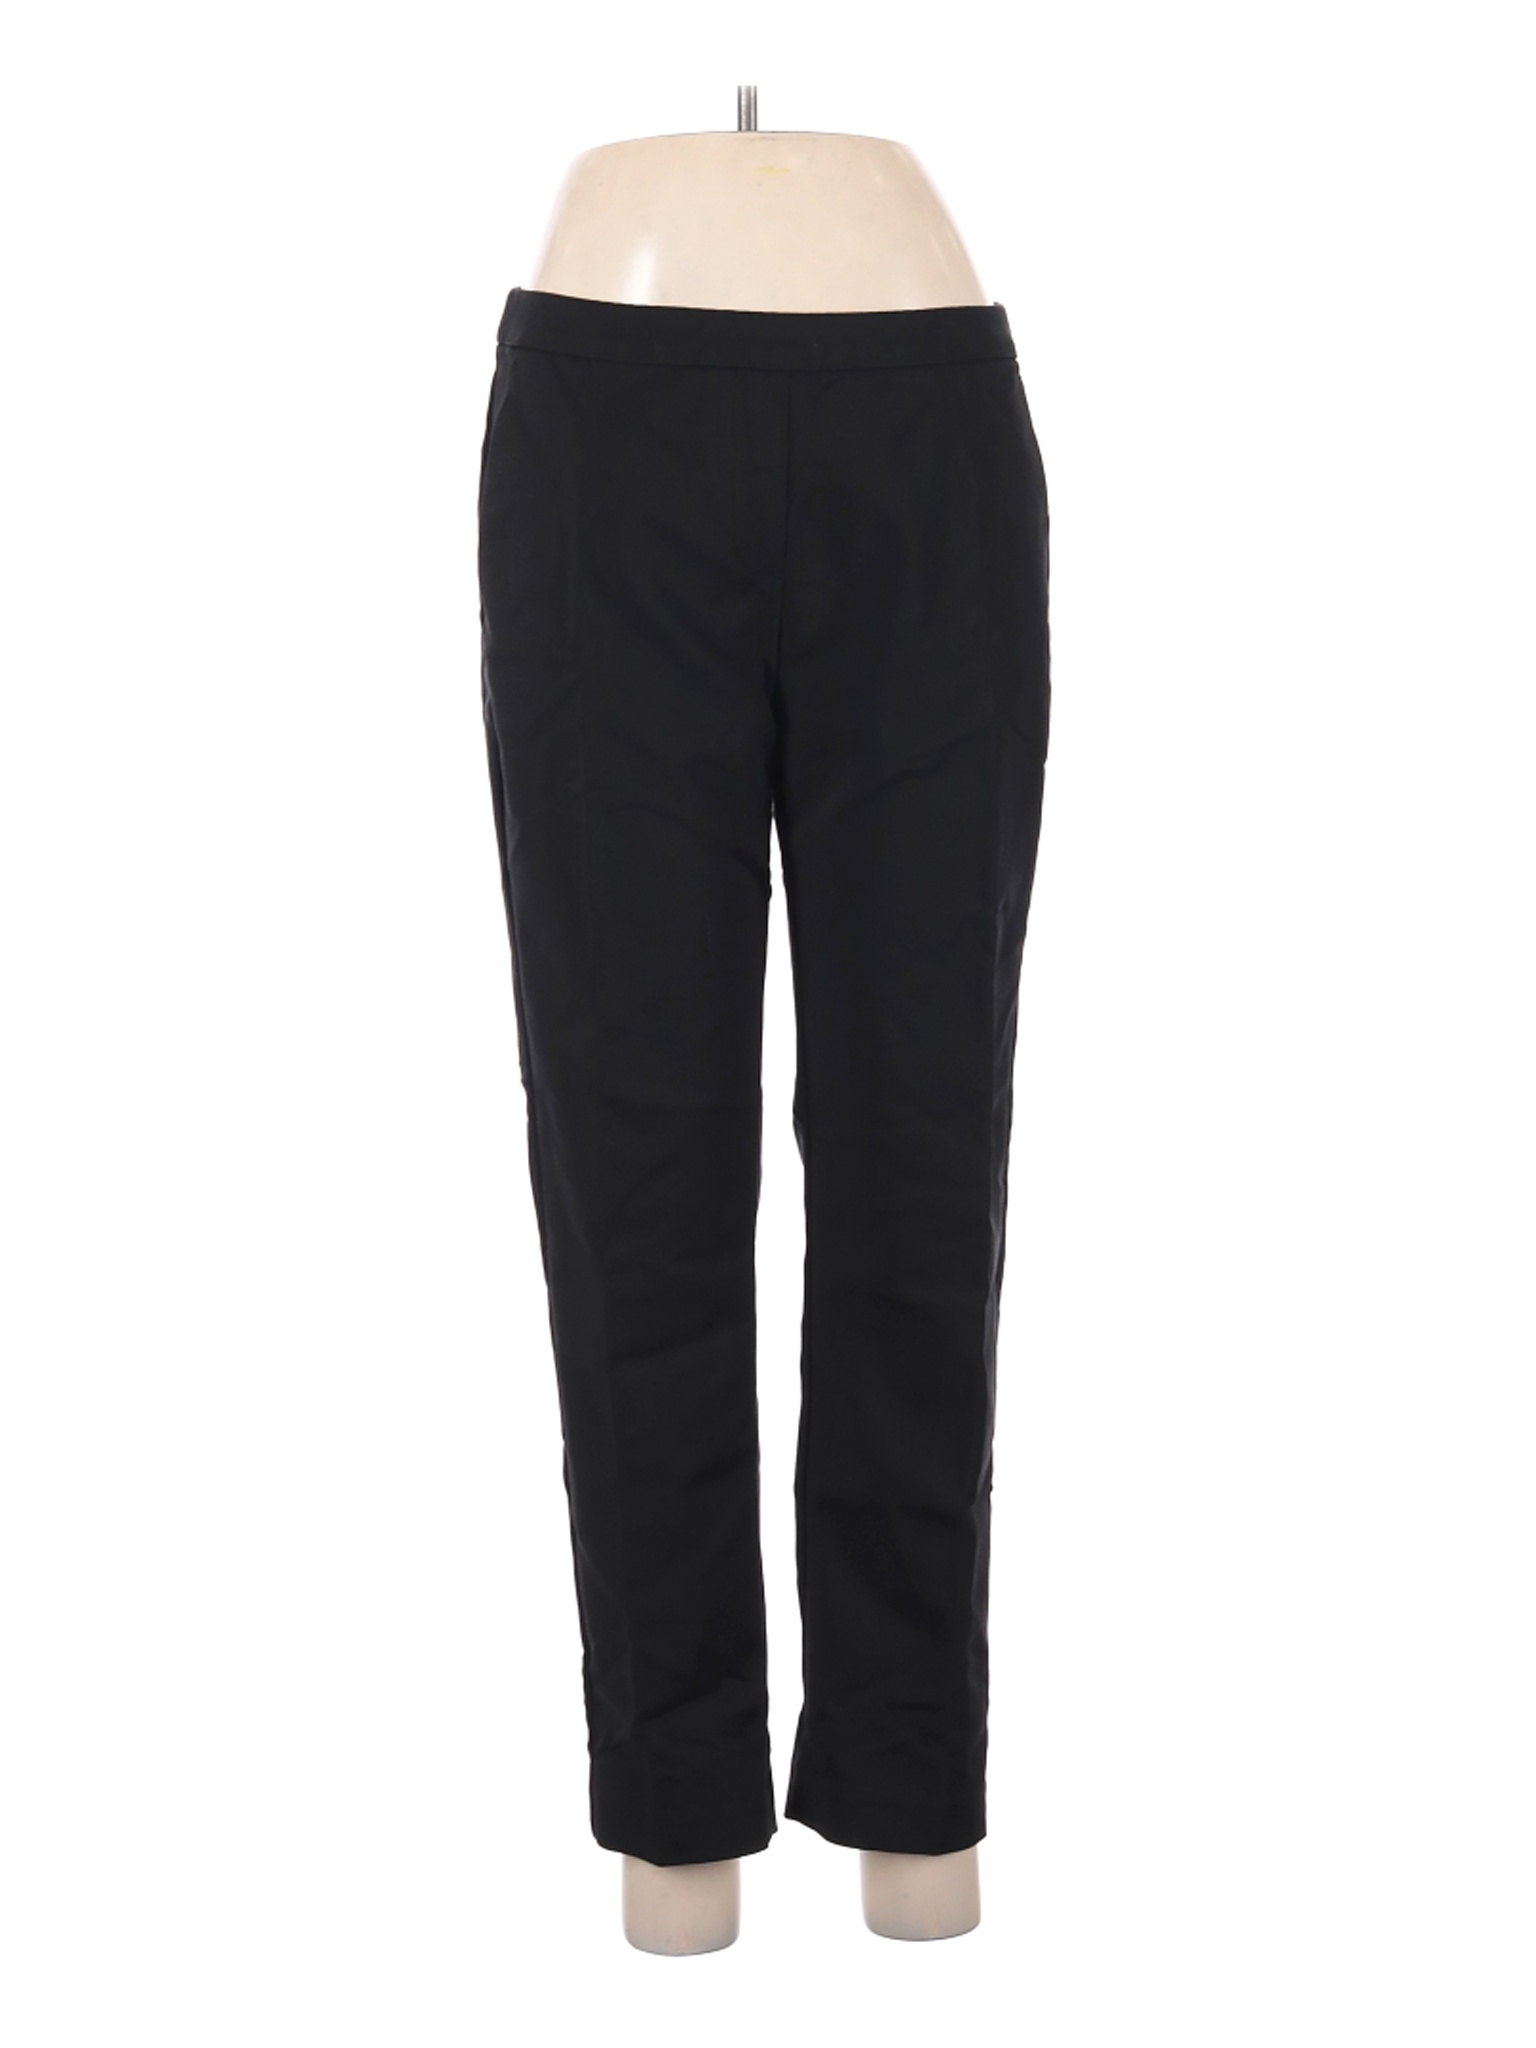 Gibson Latimer Women Black Casual Pants 6 | eBay